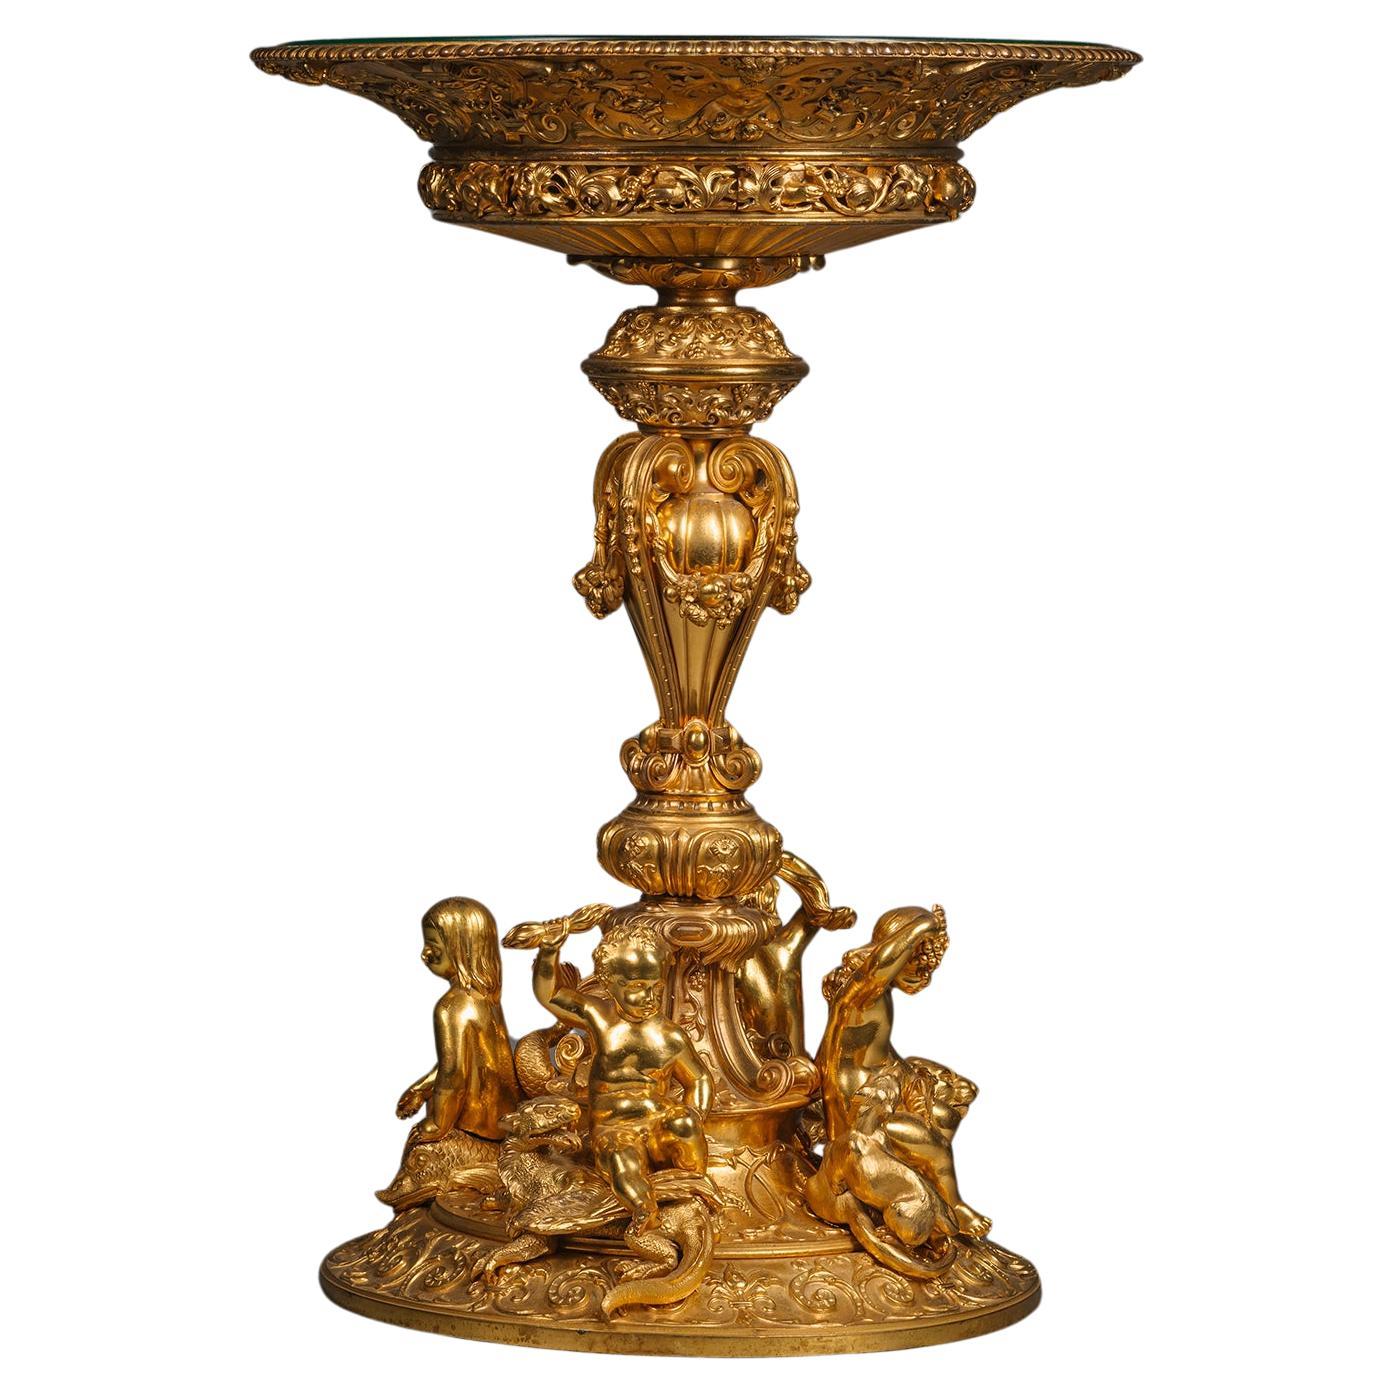 A Large Louis Philippe Period Gilt-Bronze Table Centrepiece